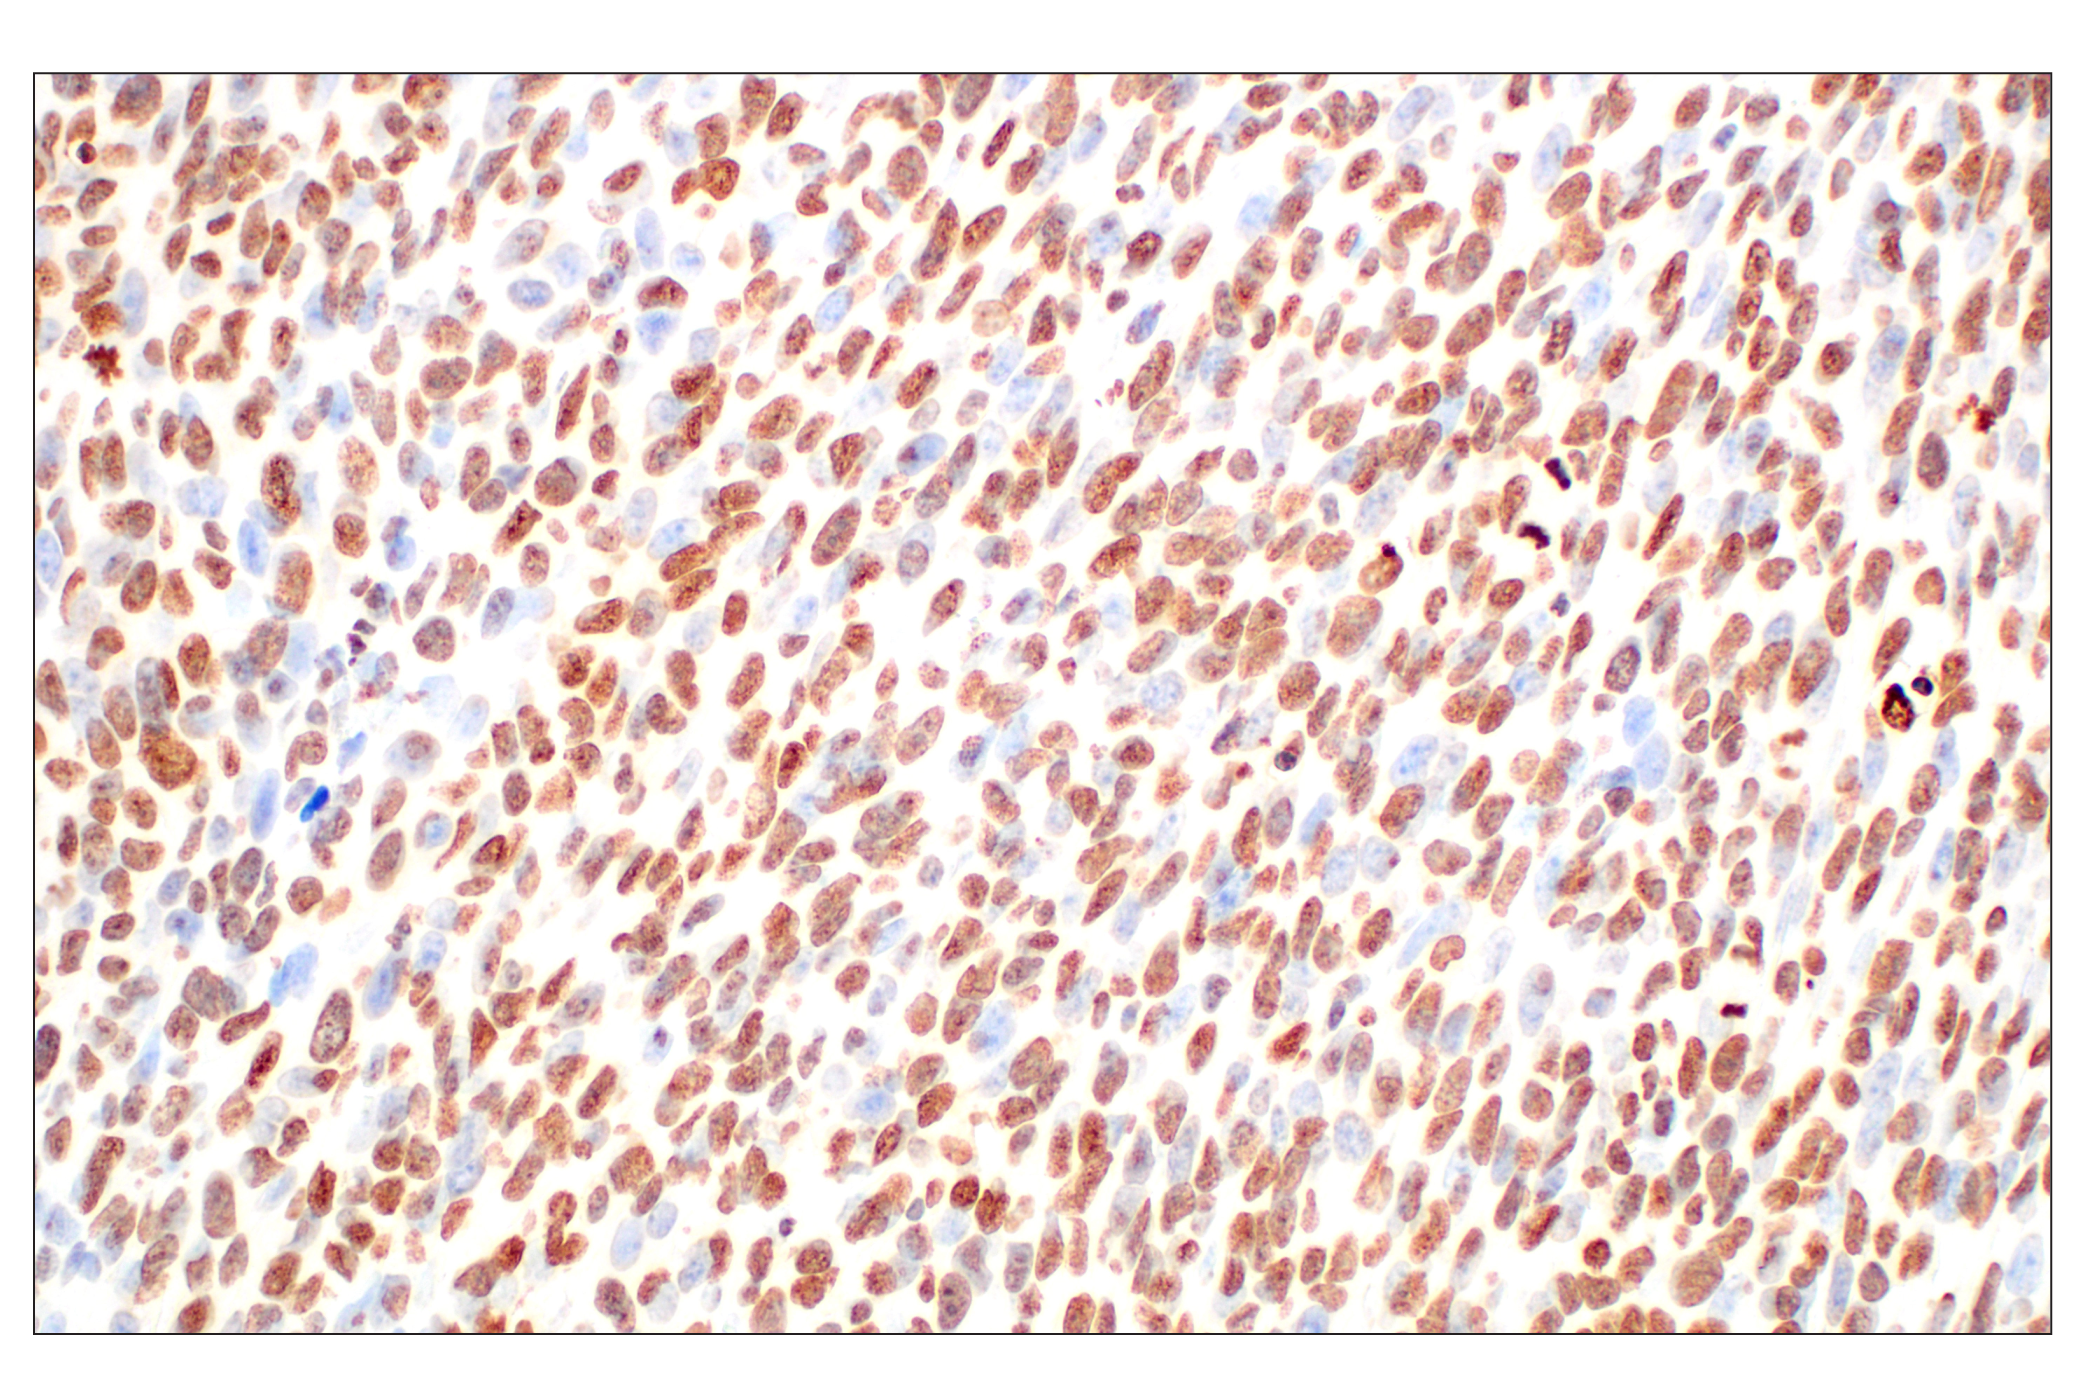  Image 5: PhosphoPlus® Histone H3 (Ser10) Antibody Duet